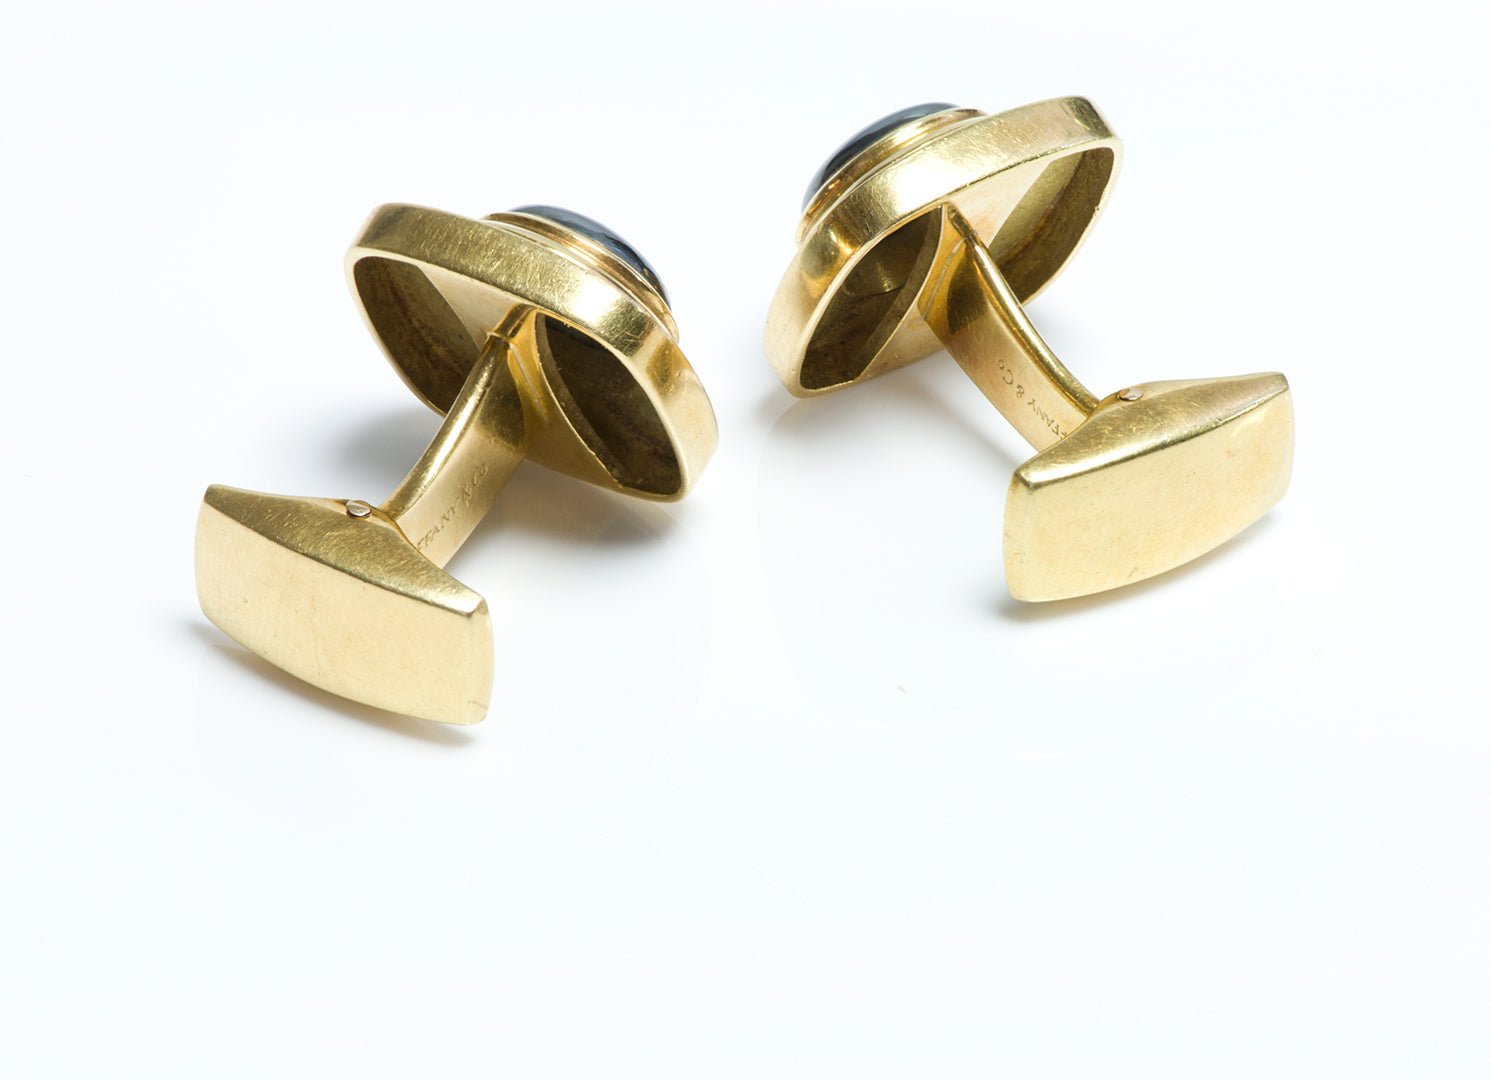 Tiffany & Co. Leo De Vroomen 18K Gold Hematite Enamel Cufflinks